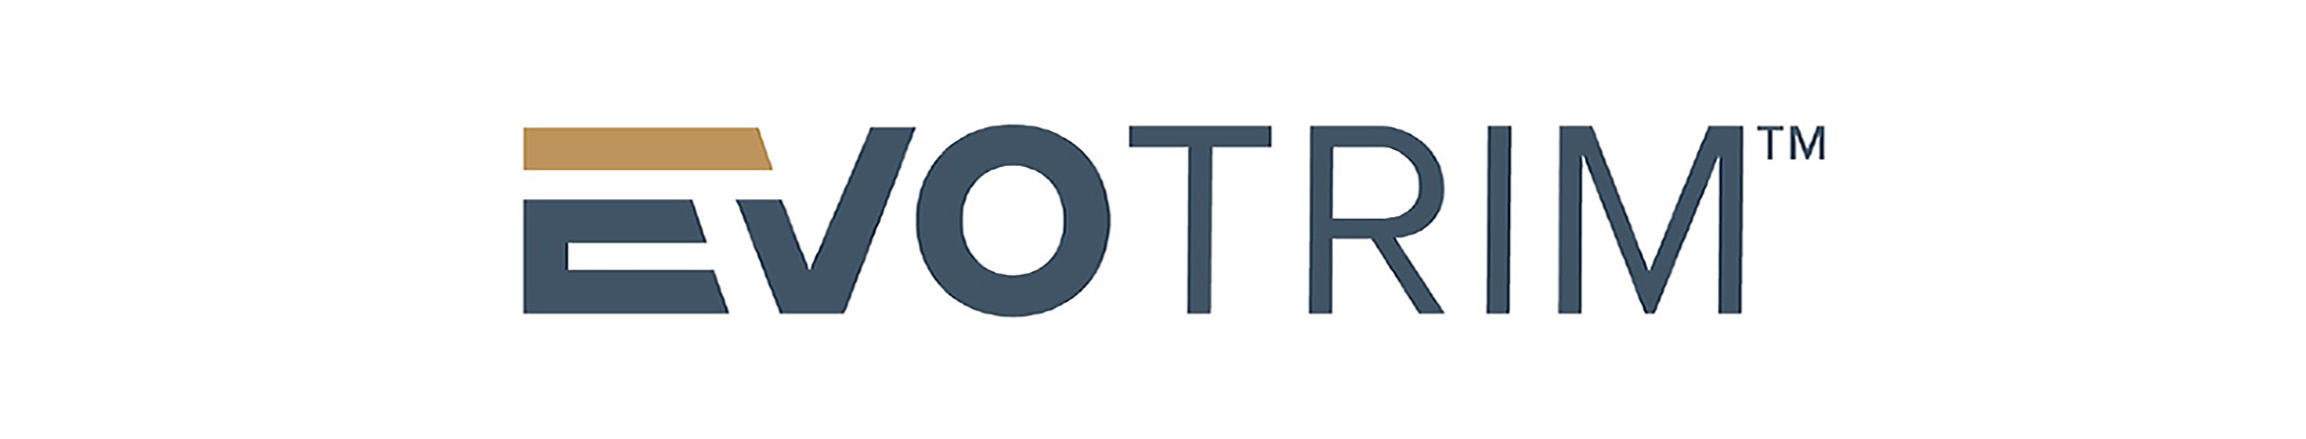 EvoTrim primed trim logo banner